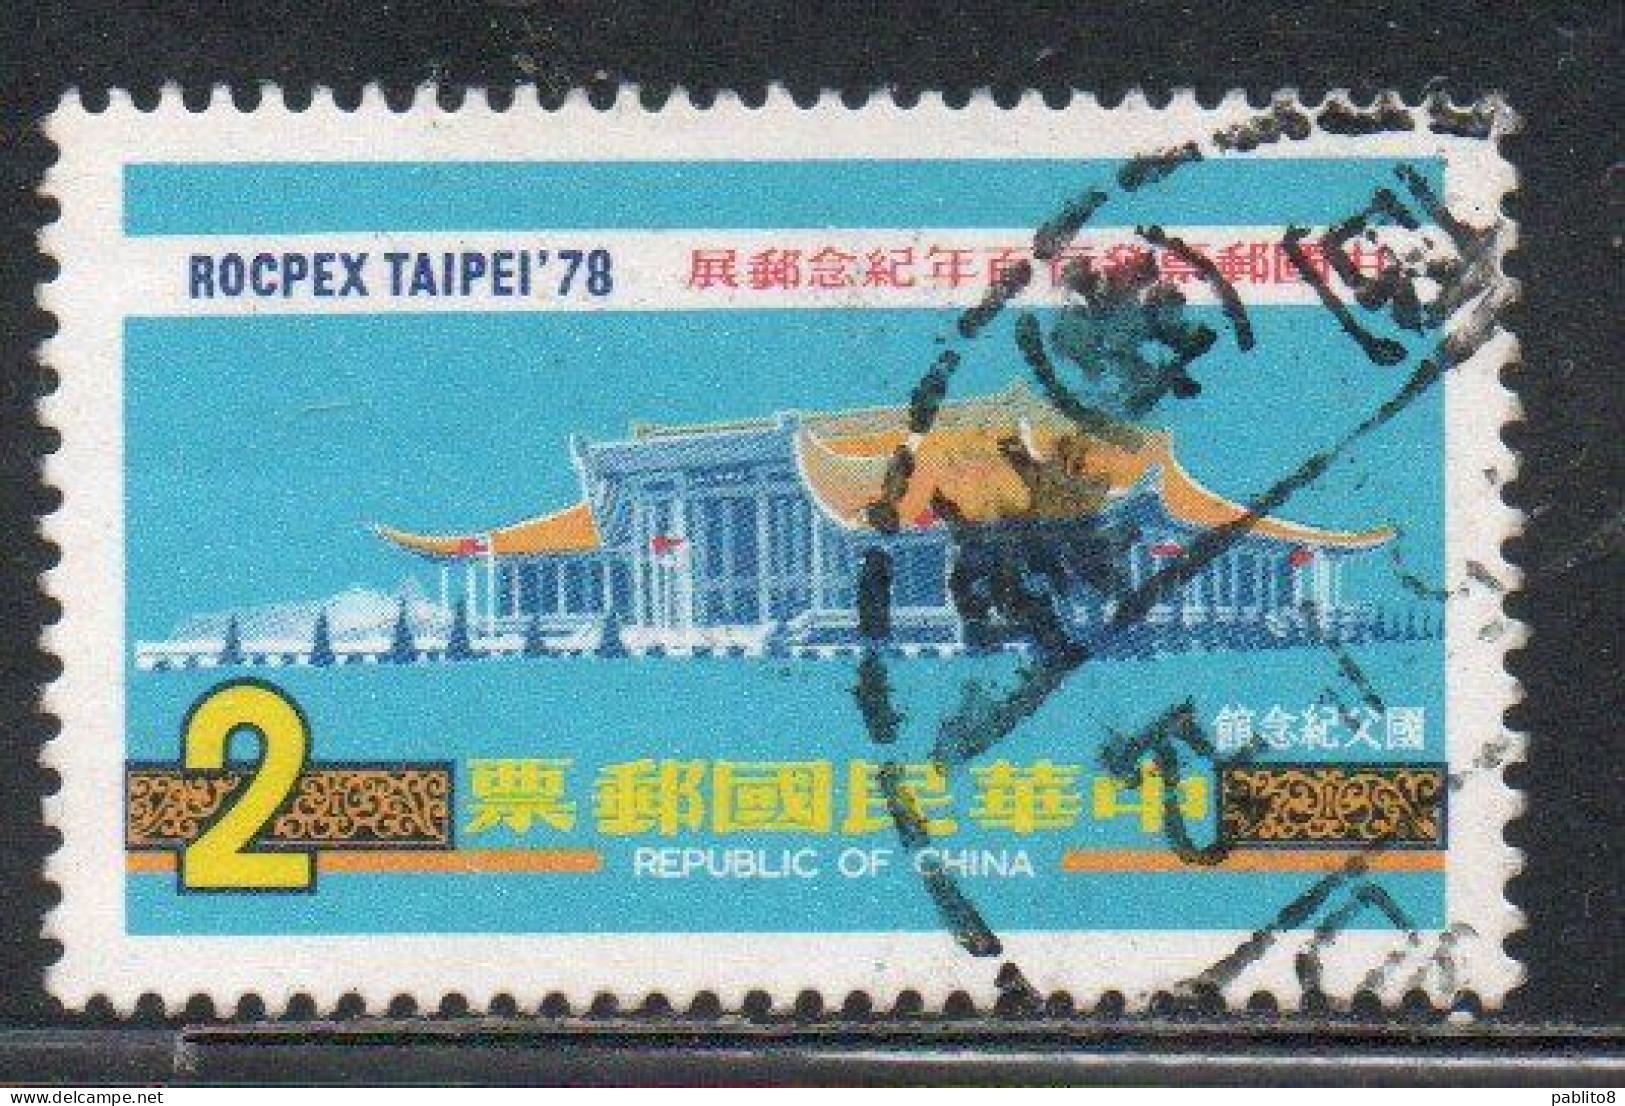 CHINA REPUBLIC CINA TAIWAN FORMOSA 1978 ROCPEX78 PHILATELIC EXHIBITION SUN YAT-SEN MEMORIAL HALL 2$ USED USATO OBLITERE' - Gebruikt